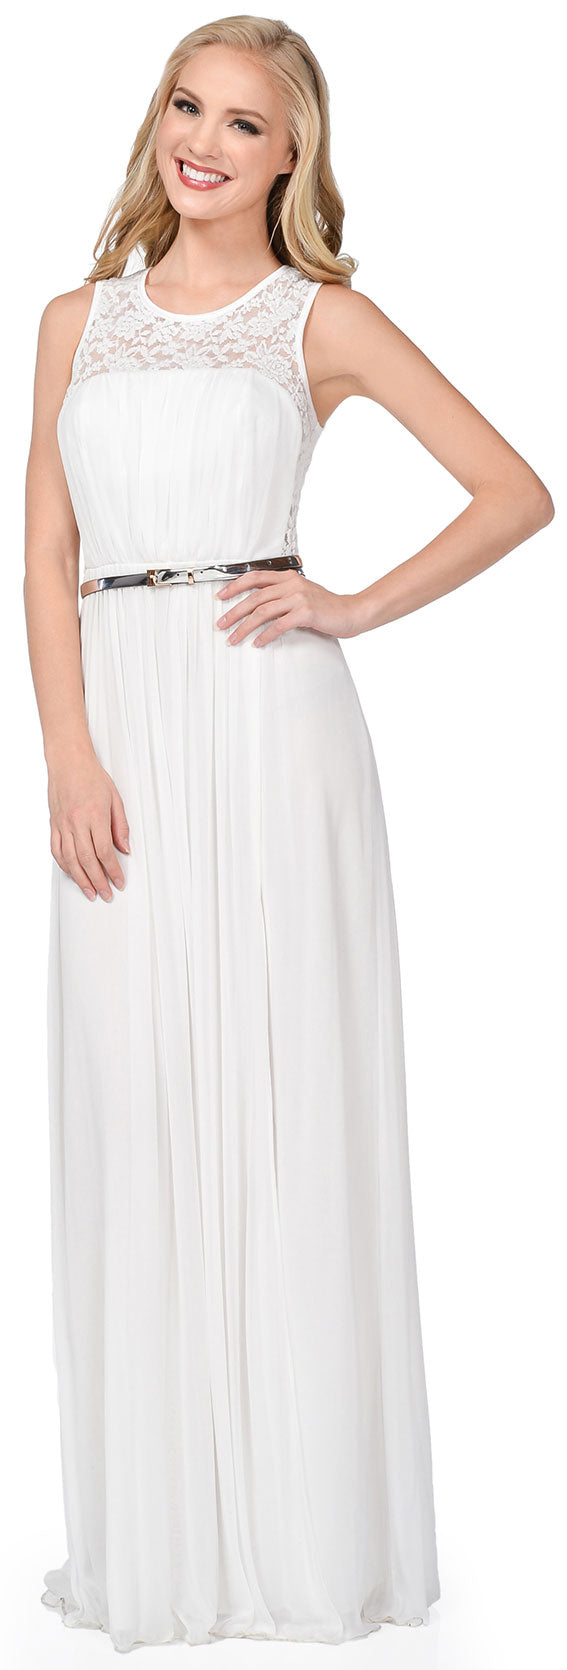 Main image of Sheer Lace Top Waist Belt Long Bridesmaid Dress